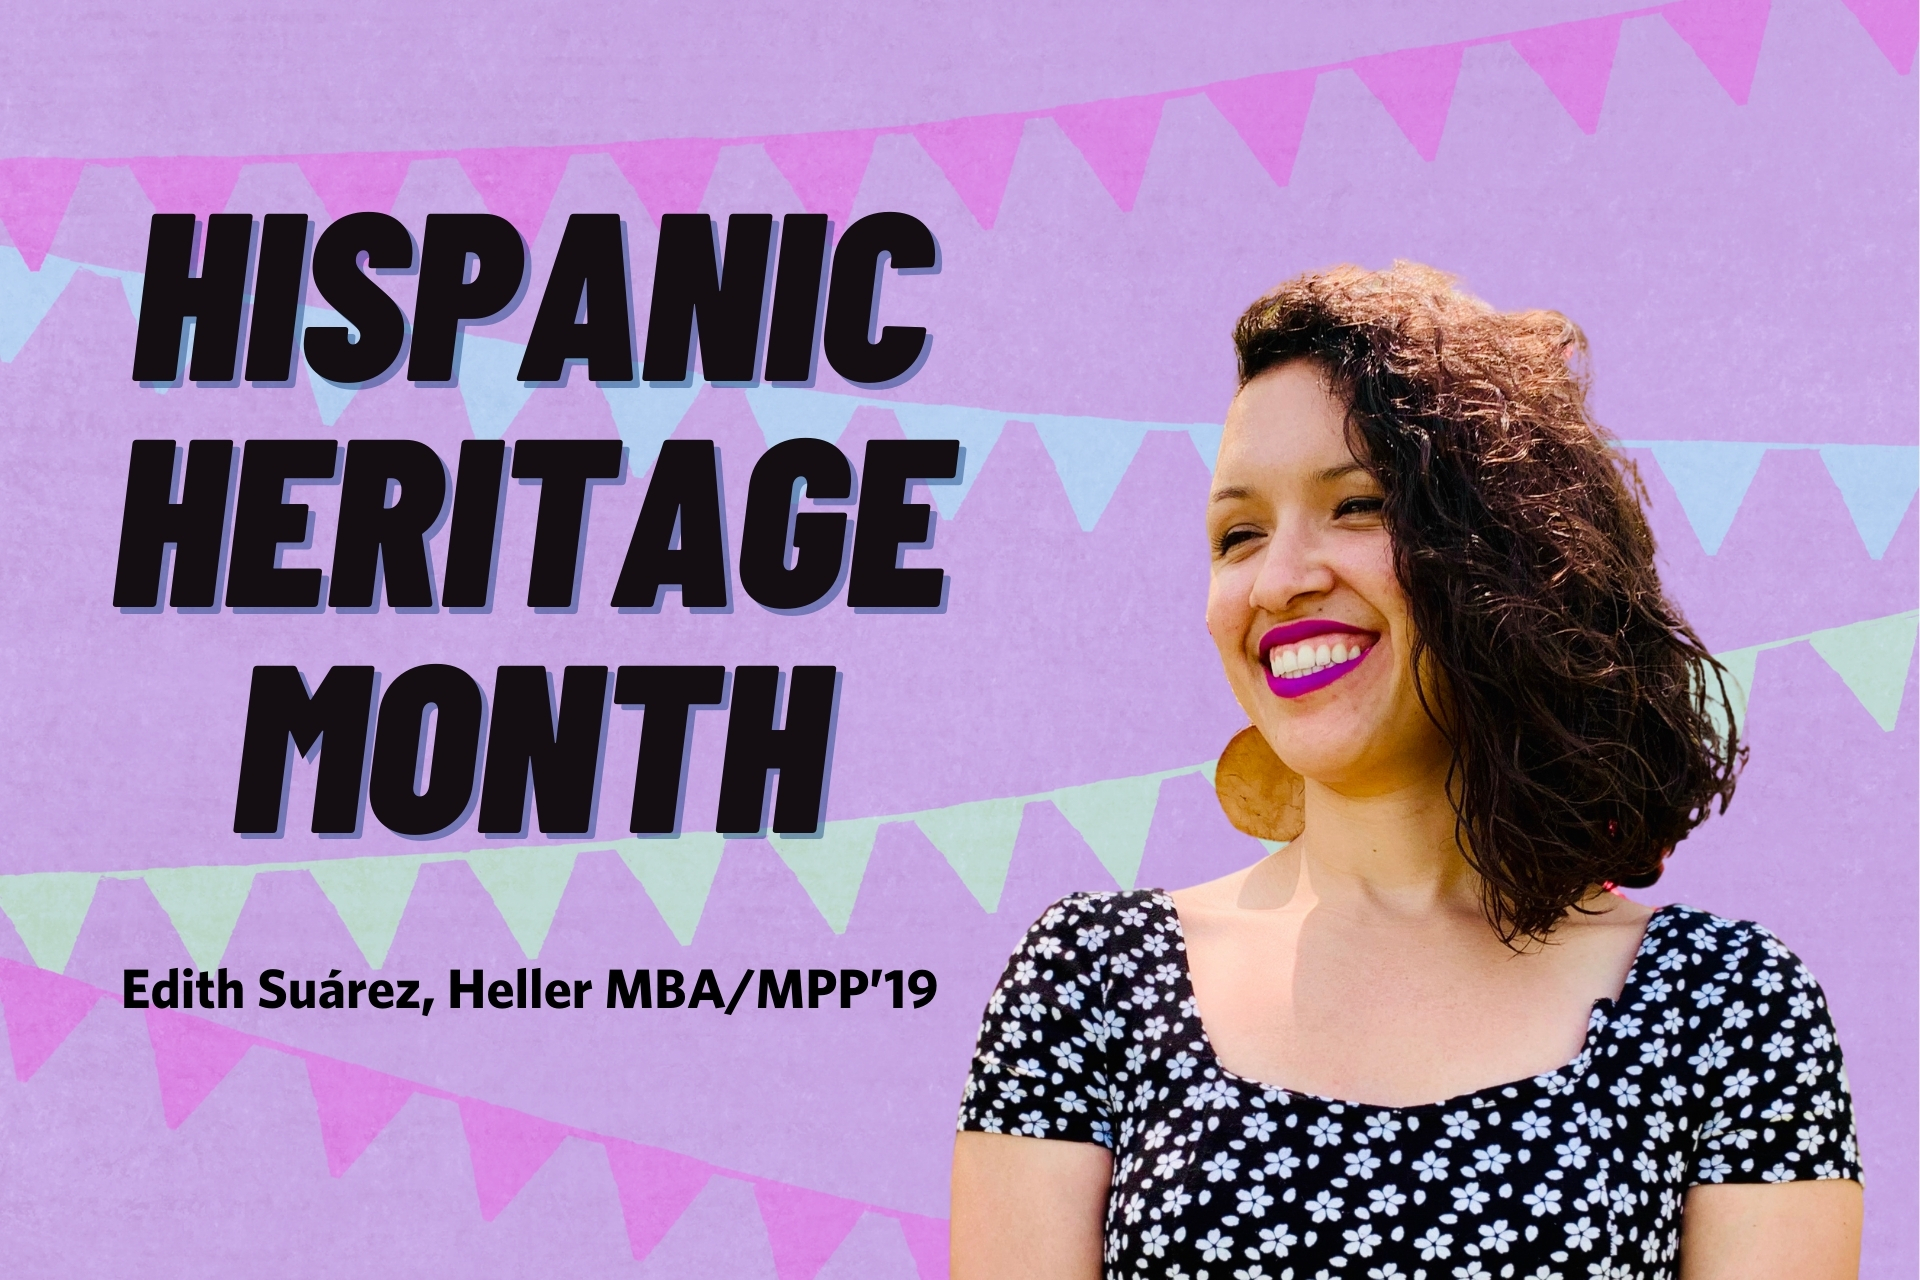 Text that reads "Hispanic Heritage Month, Edith Suarez"